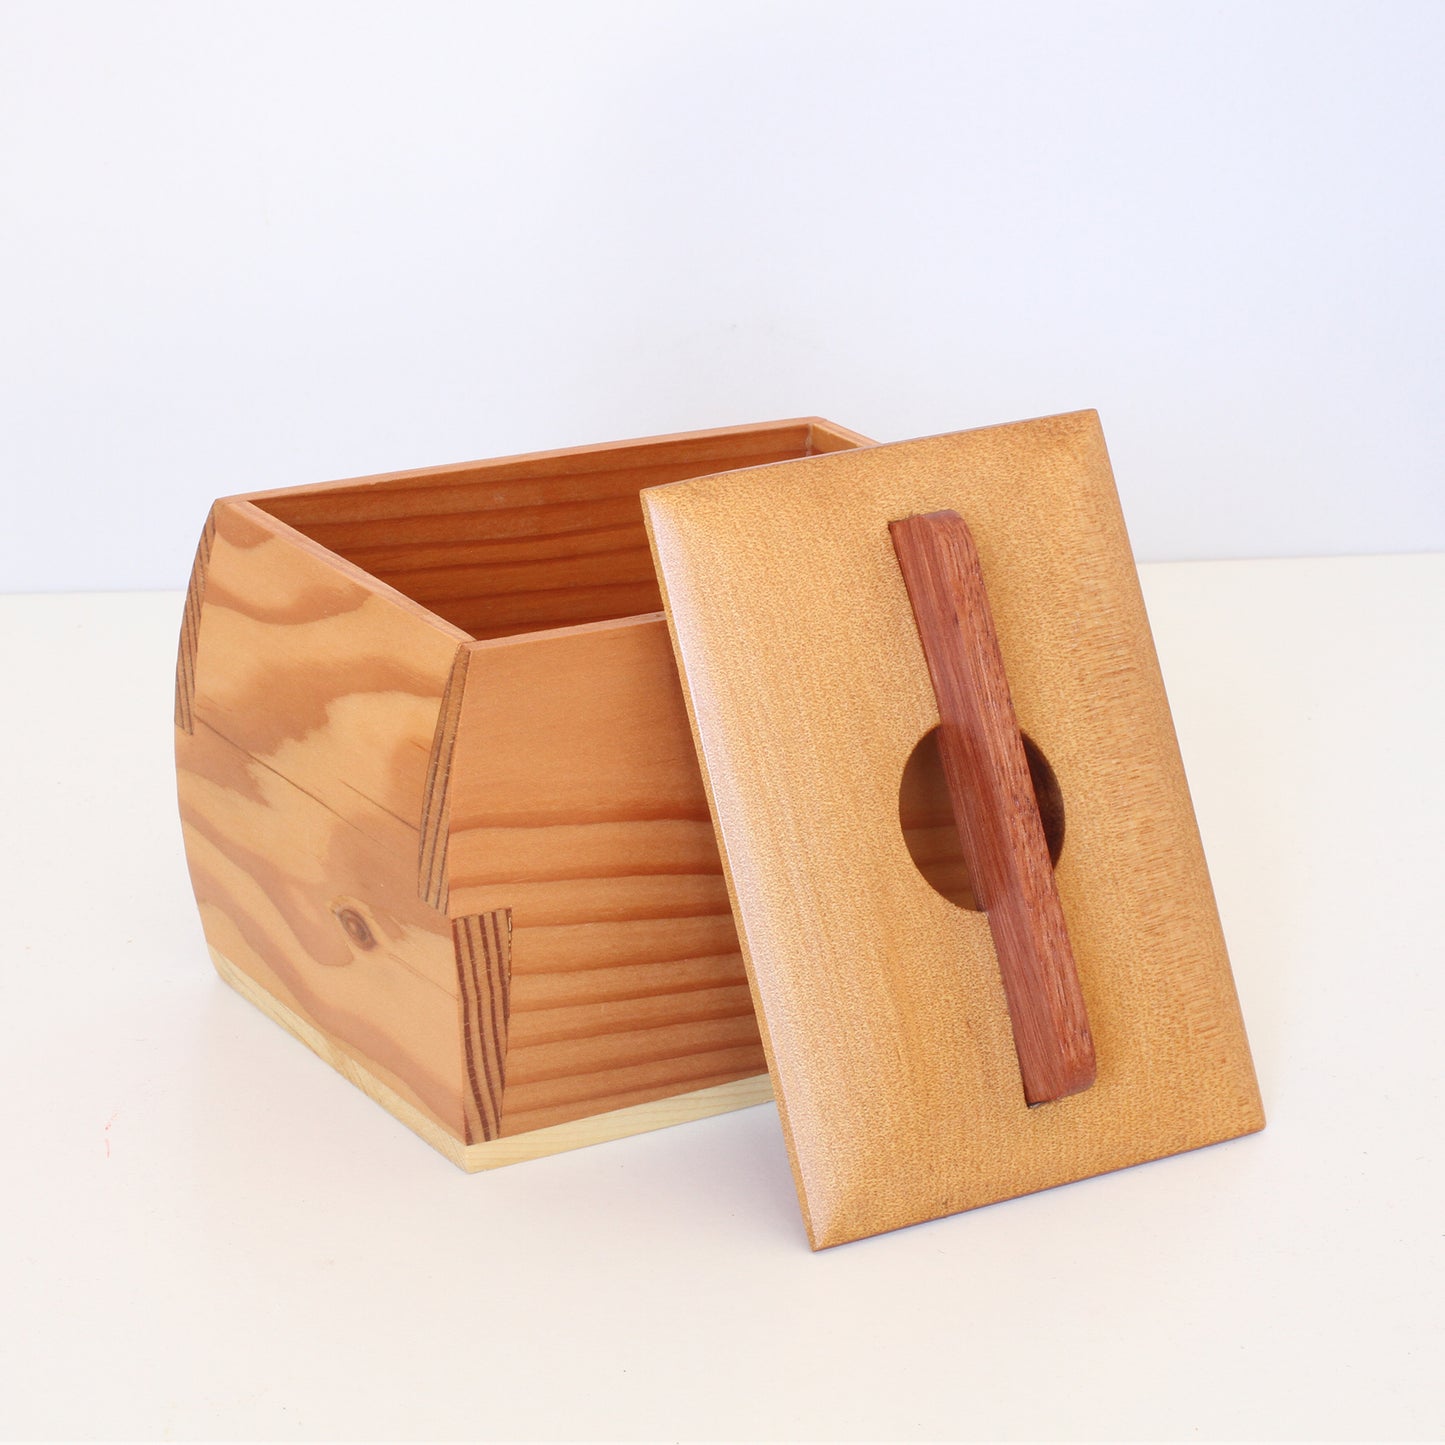 Handcrafted Wooden Keepsake Curved Box - Australian Timbers: Oregon, Myrtle, Cherry, Huon Pine